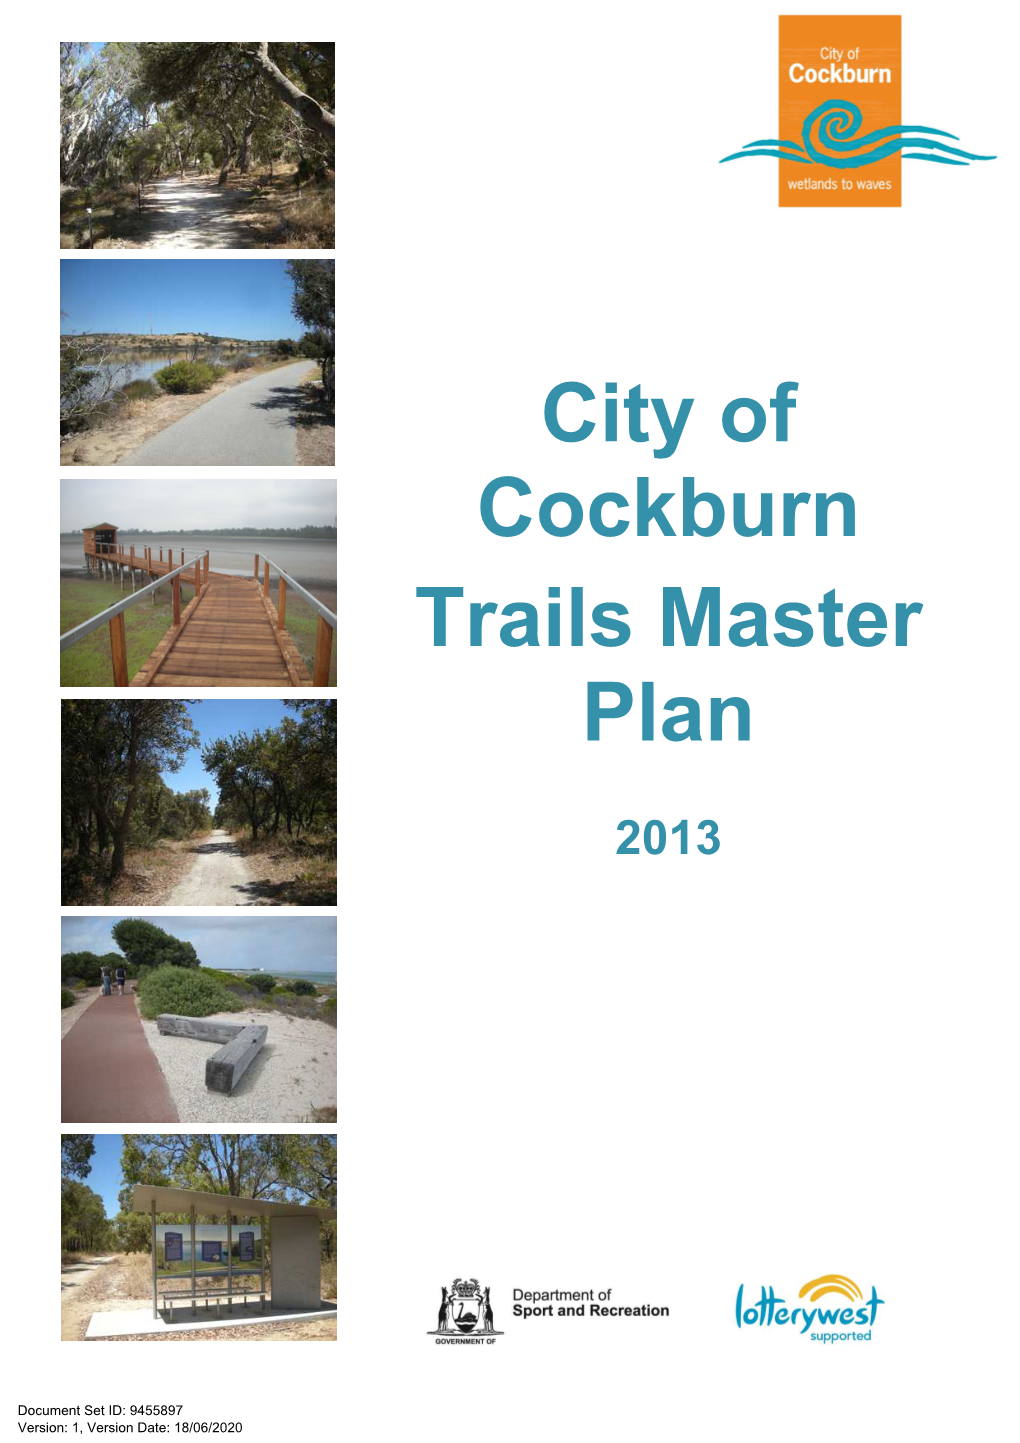 City of Cockburn Trails Master Plan